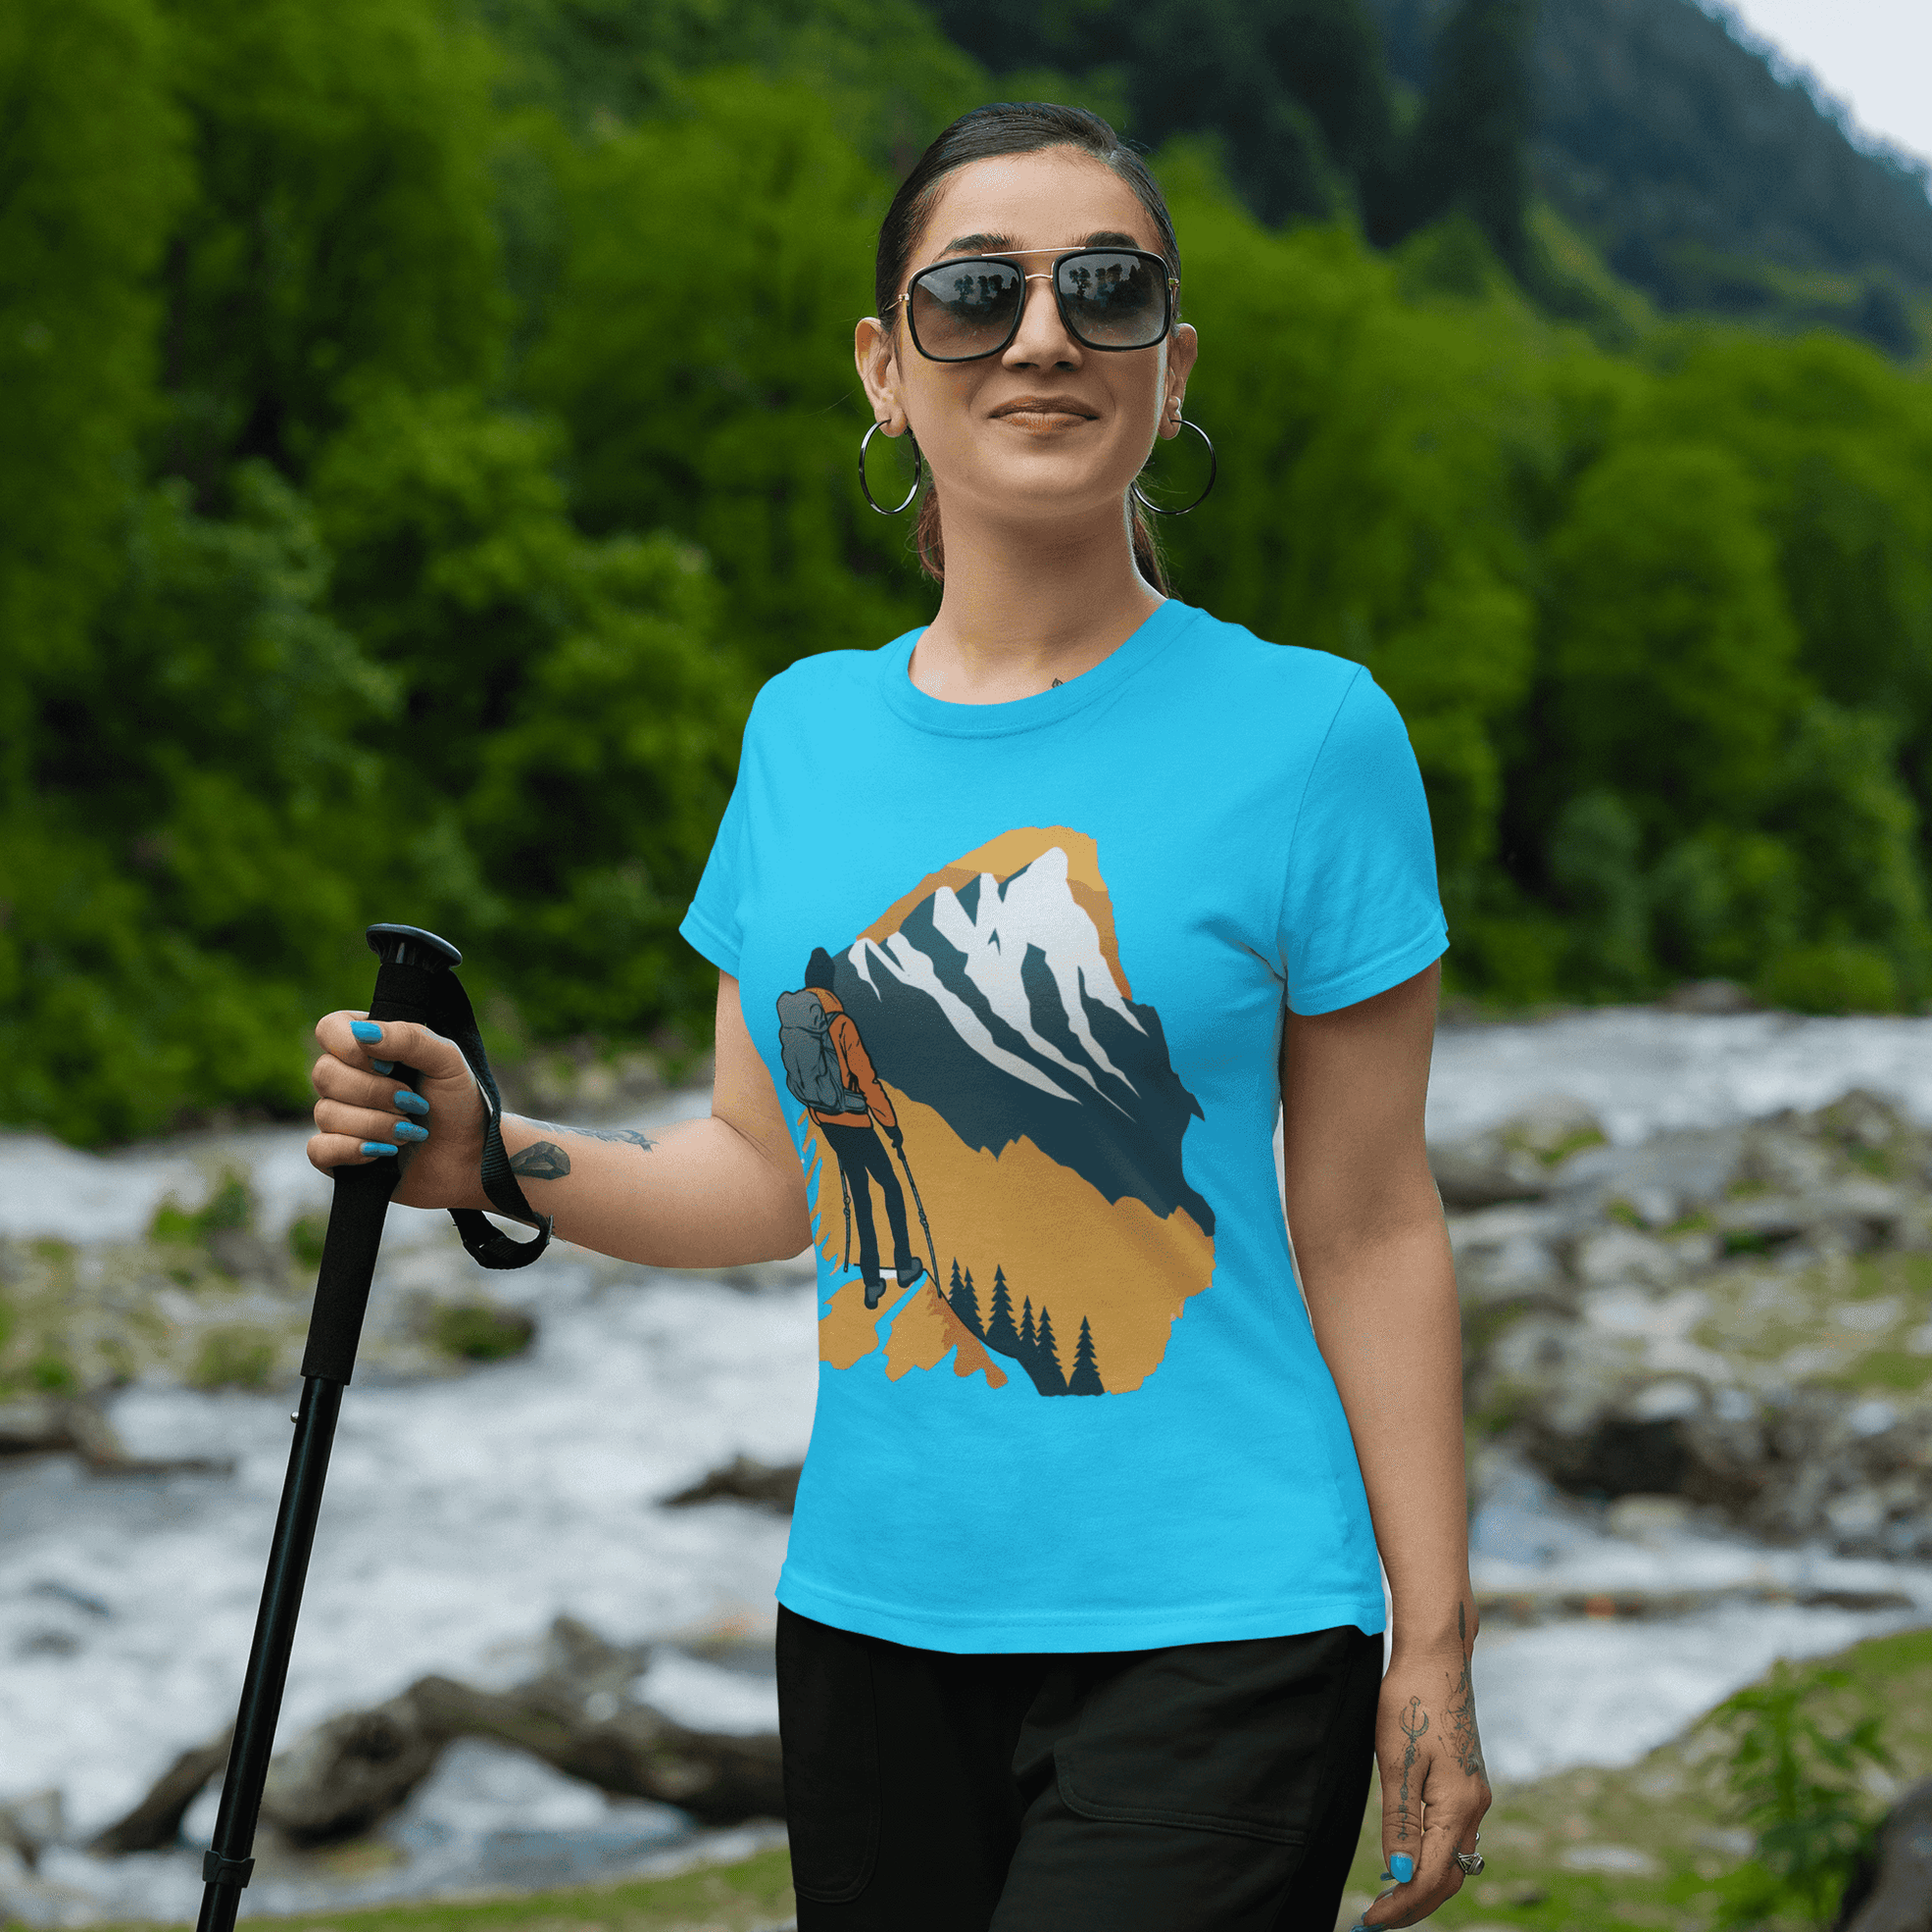 Adventure Awaits Women's Hiking/Trkking Graphic T-Shirt - Explore with Elegance